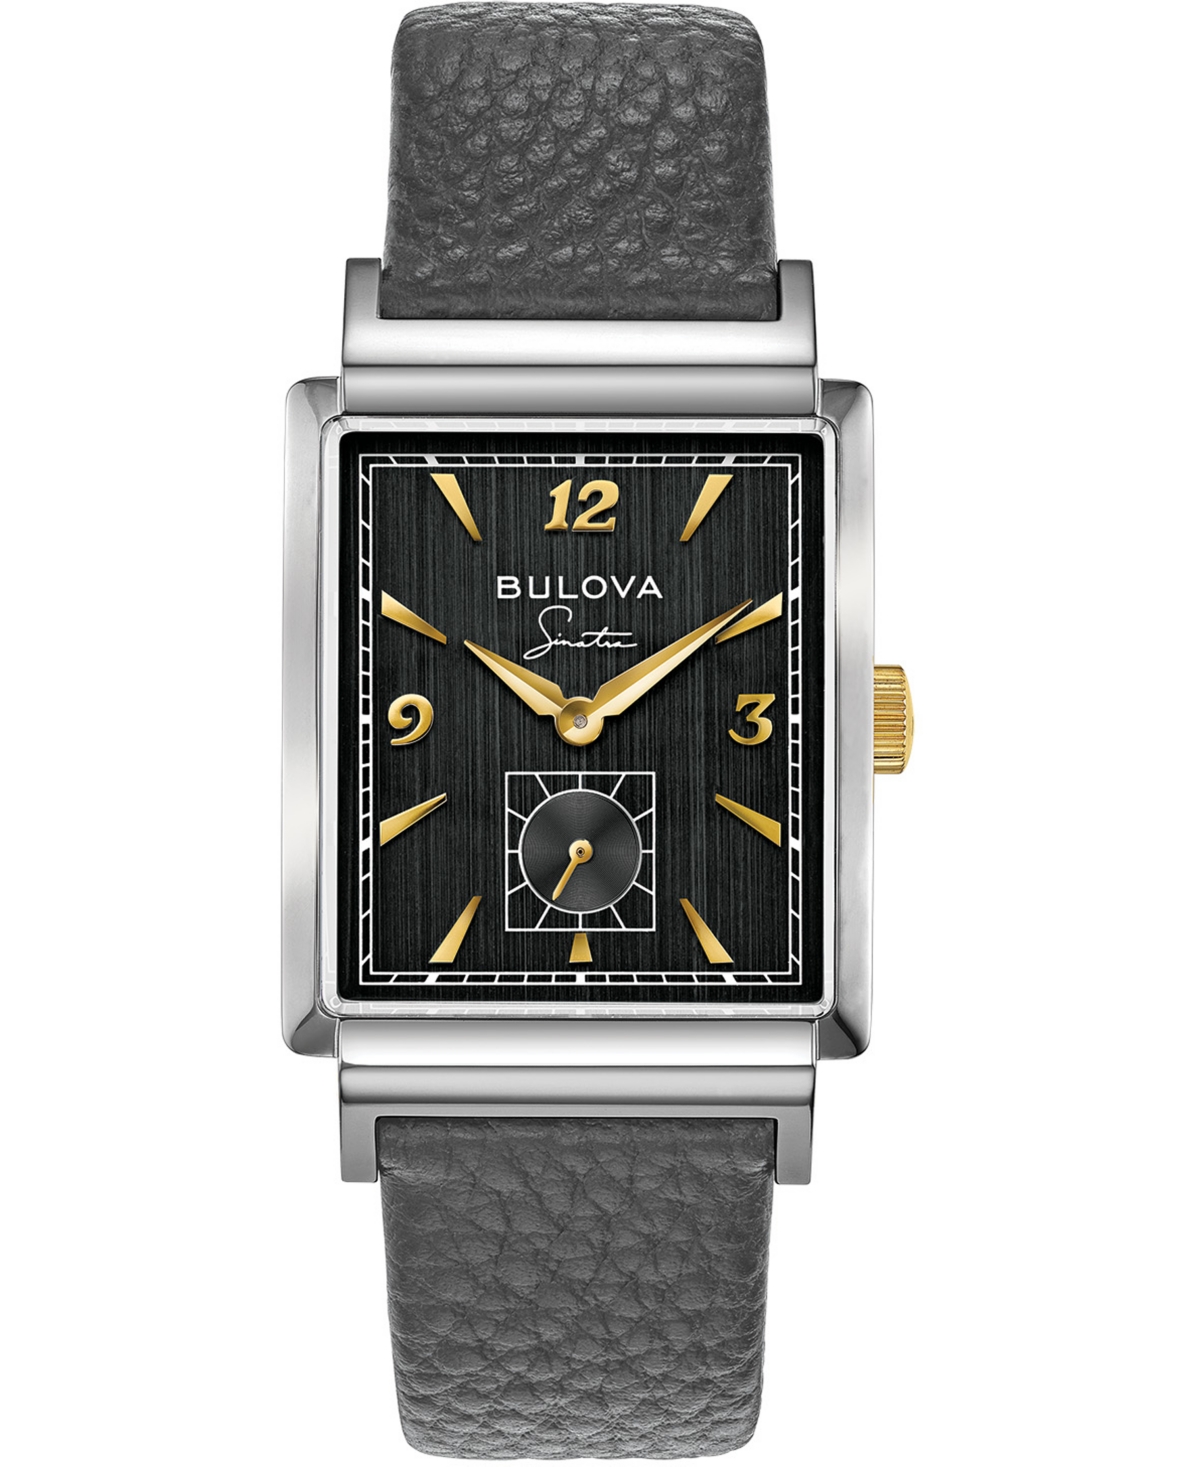 Men's Frank Sinatra My Way Gray Leather Strap Watch, 29.5 x 47mm - Black